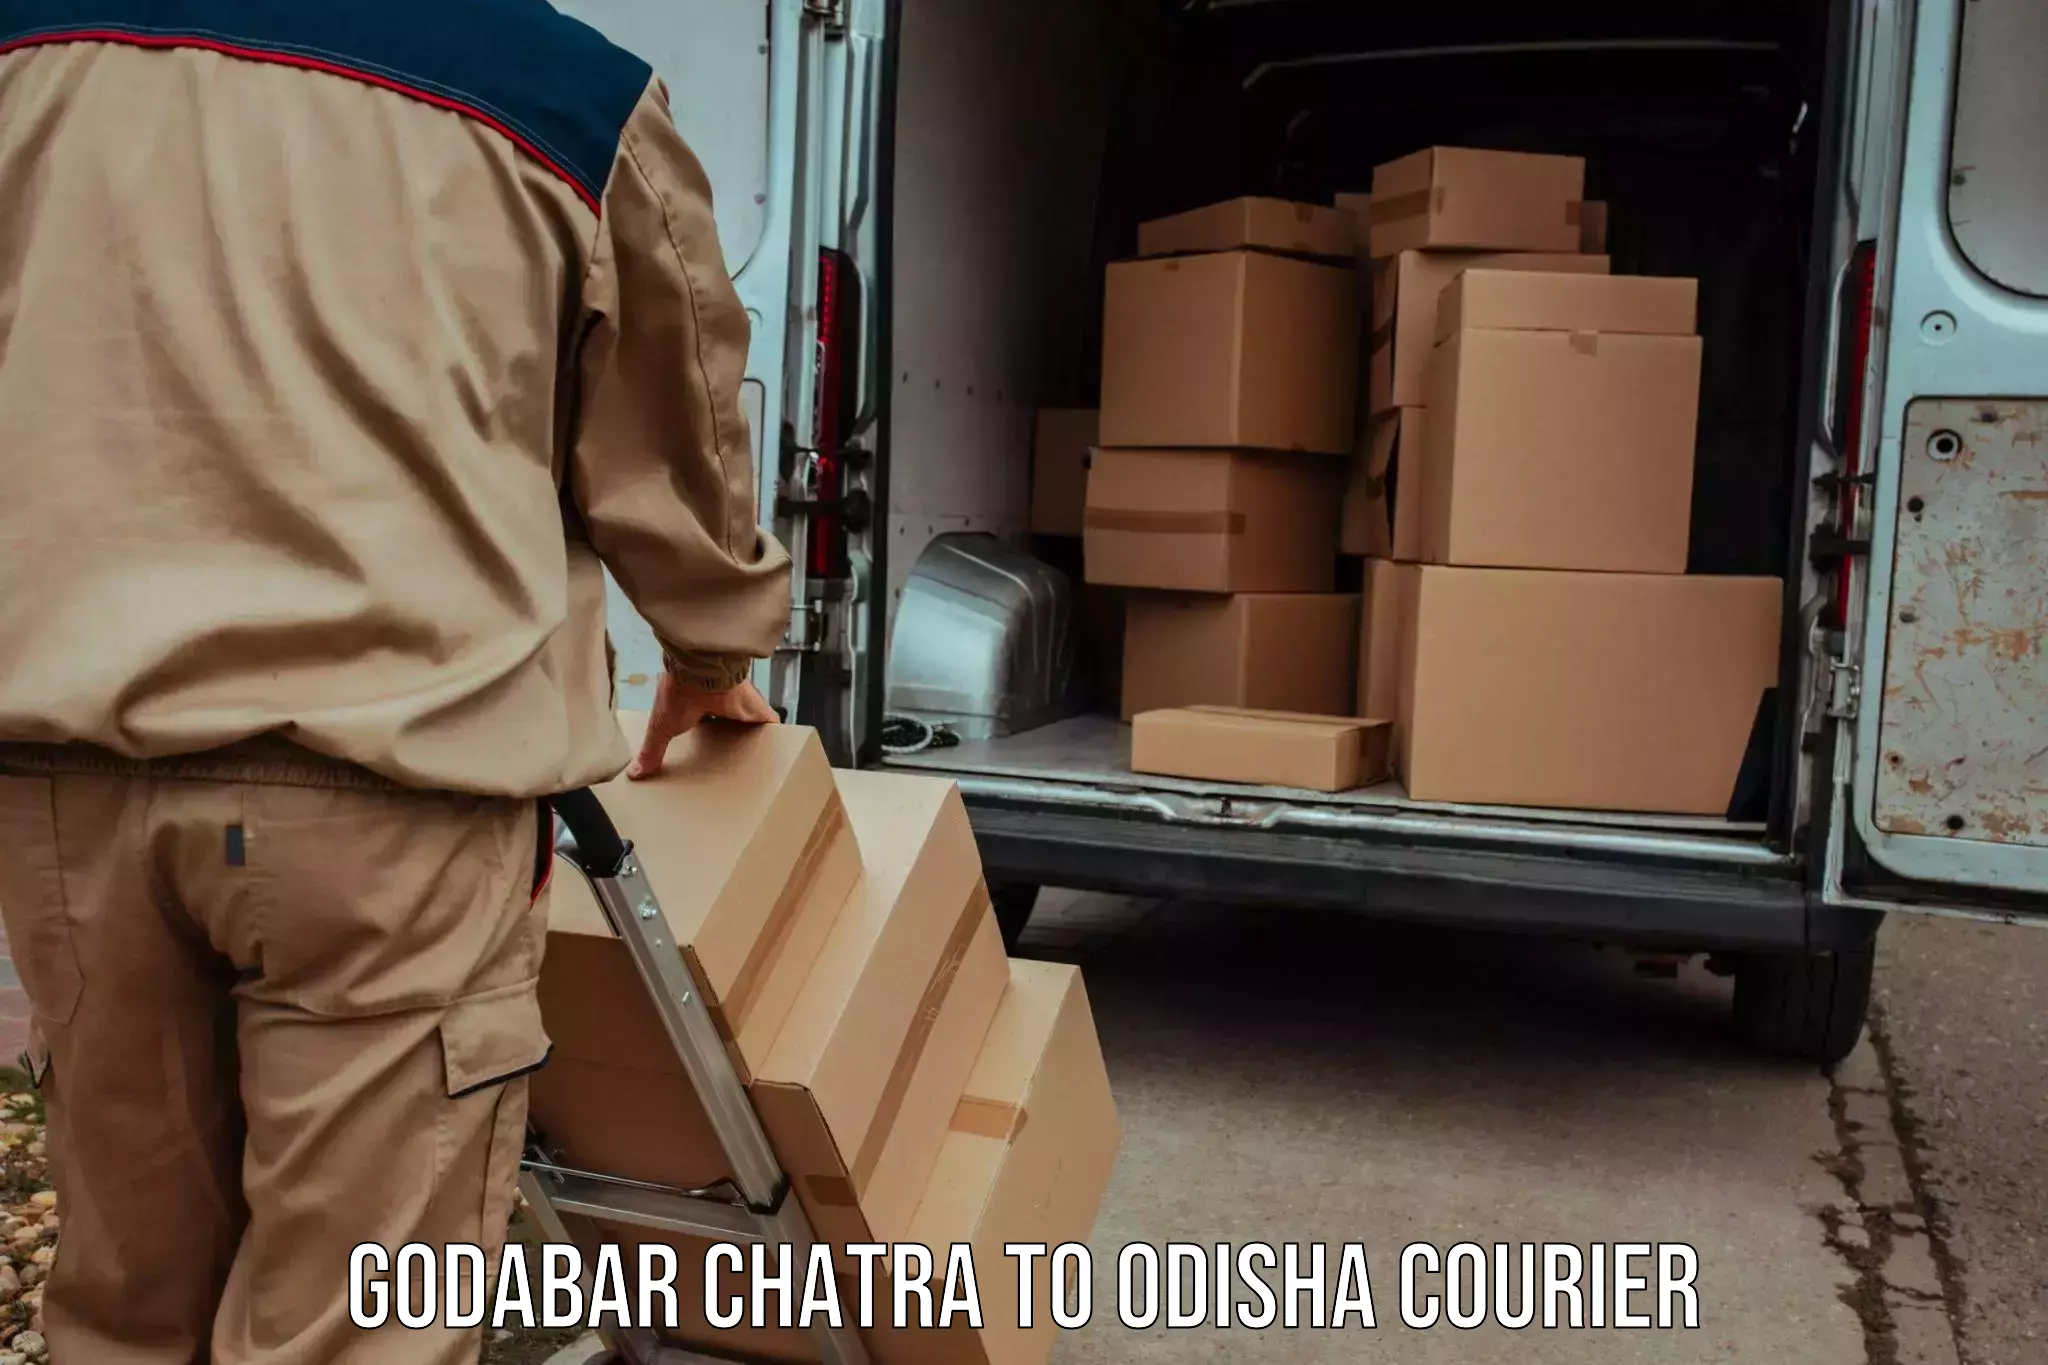 User-friendly delivery service Godabar Chatra to Odisha